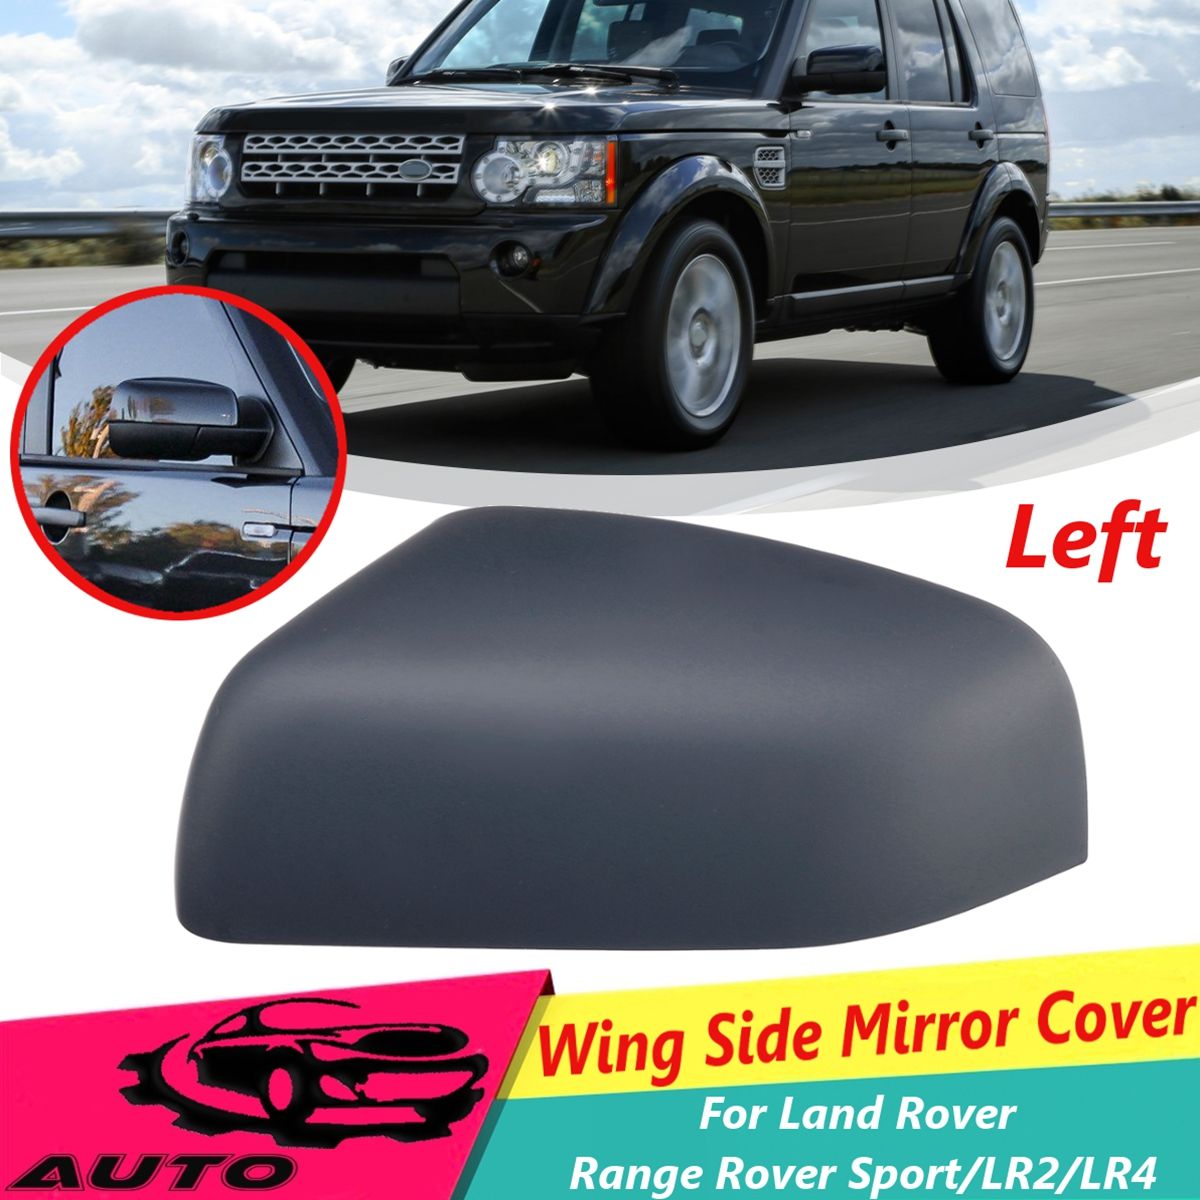 Left-Car-Wing-Side-Mirror-Cover-For-Land-Rover-LR2-LR4-Range-Rover-Sport-1584216